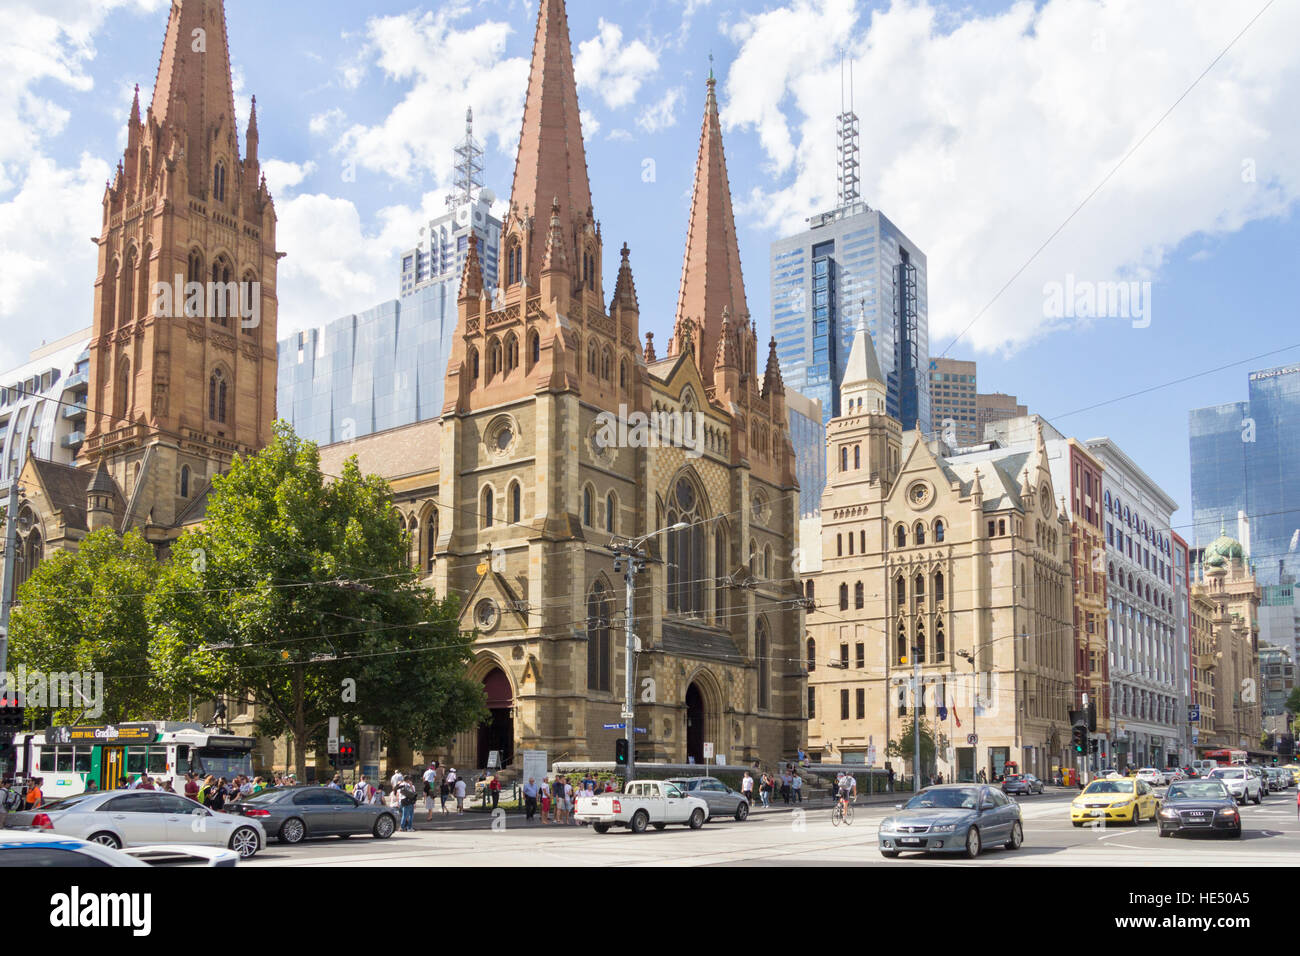 Str. Pauls Cathderal, Melbourne, Victoria, Australien Stockfoto